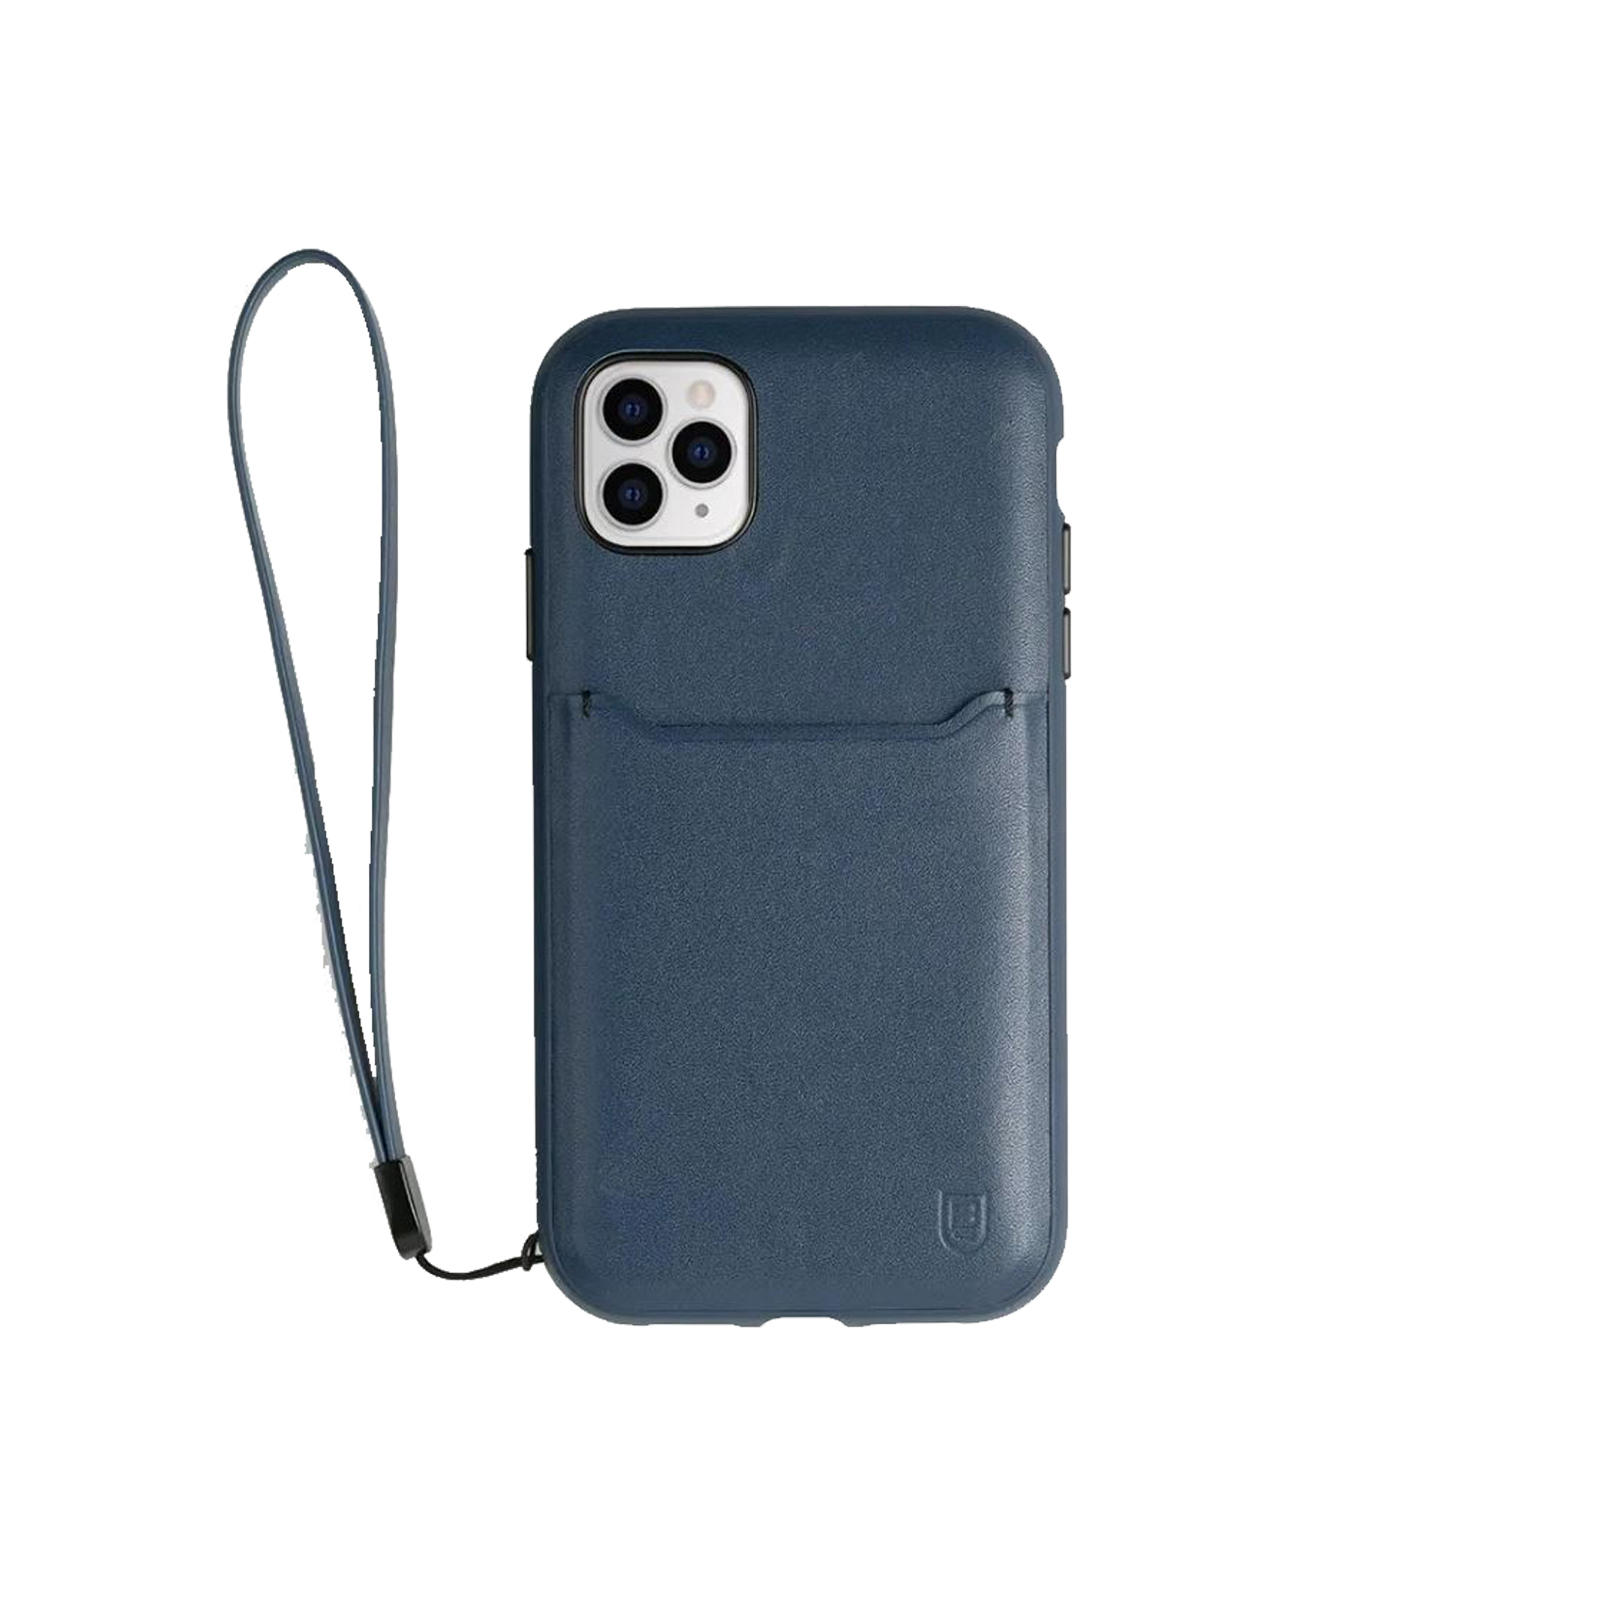 BodyGuardz Accent Pro iPhone 11 Pro Max Blue Case - Brand New